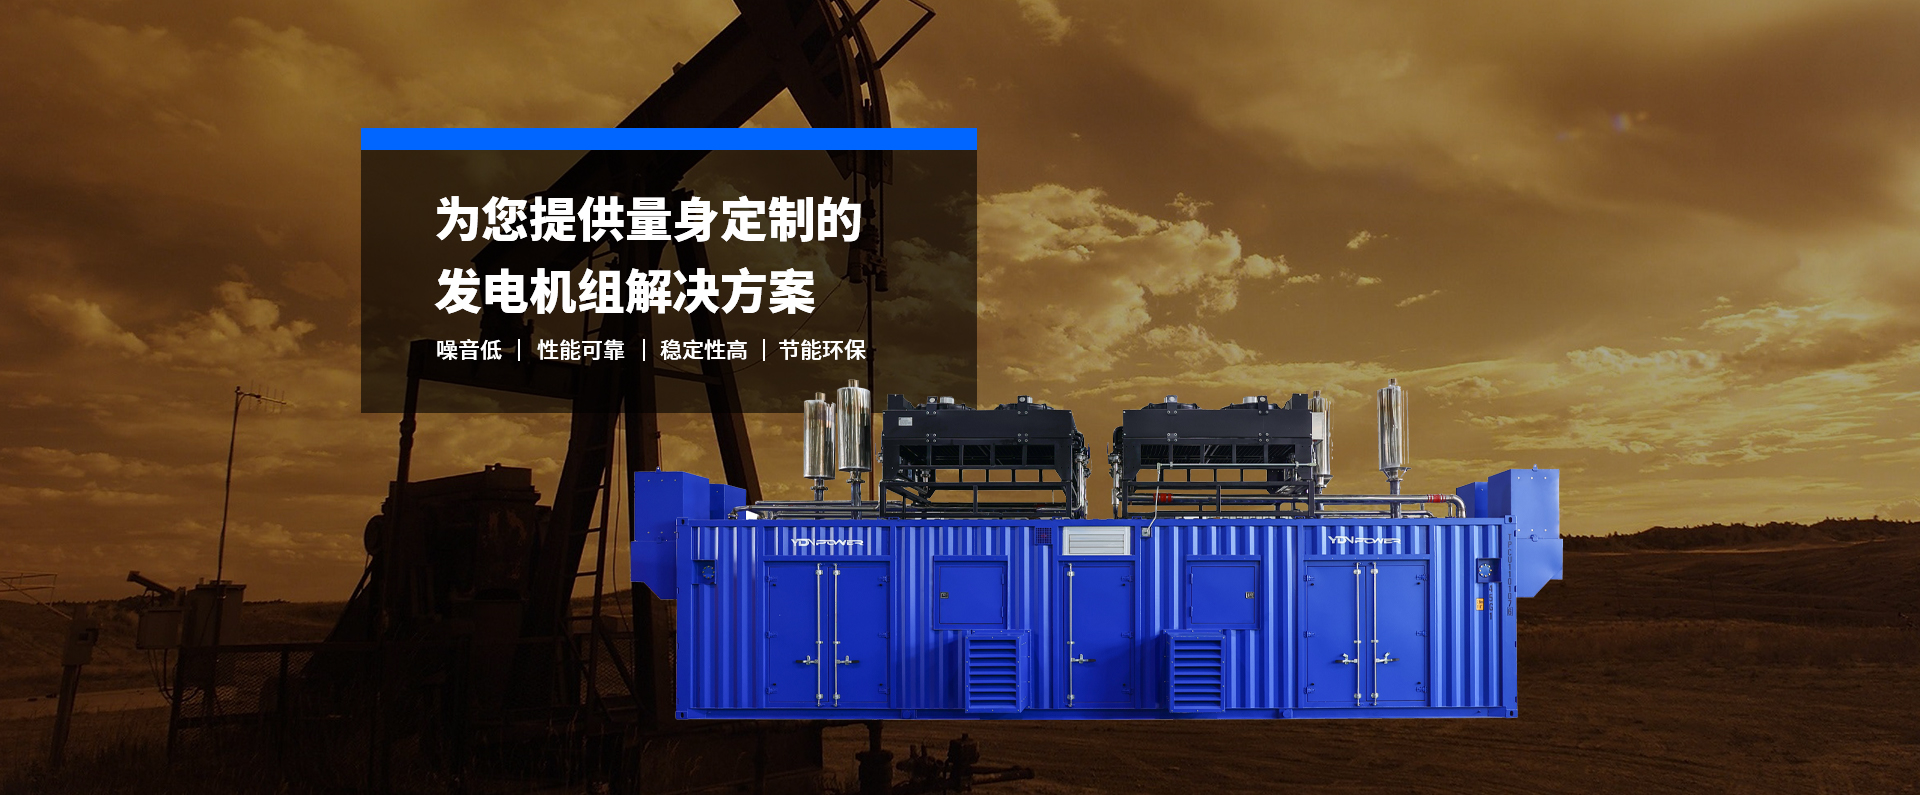 Weifang Yidaneng Power Co,. Ltd